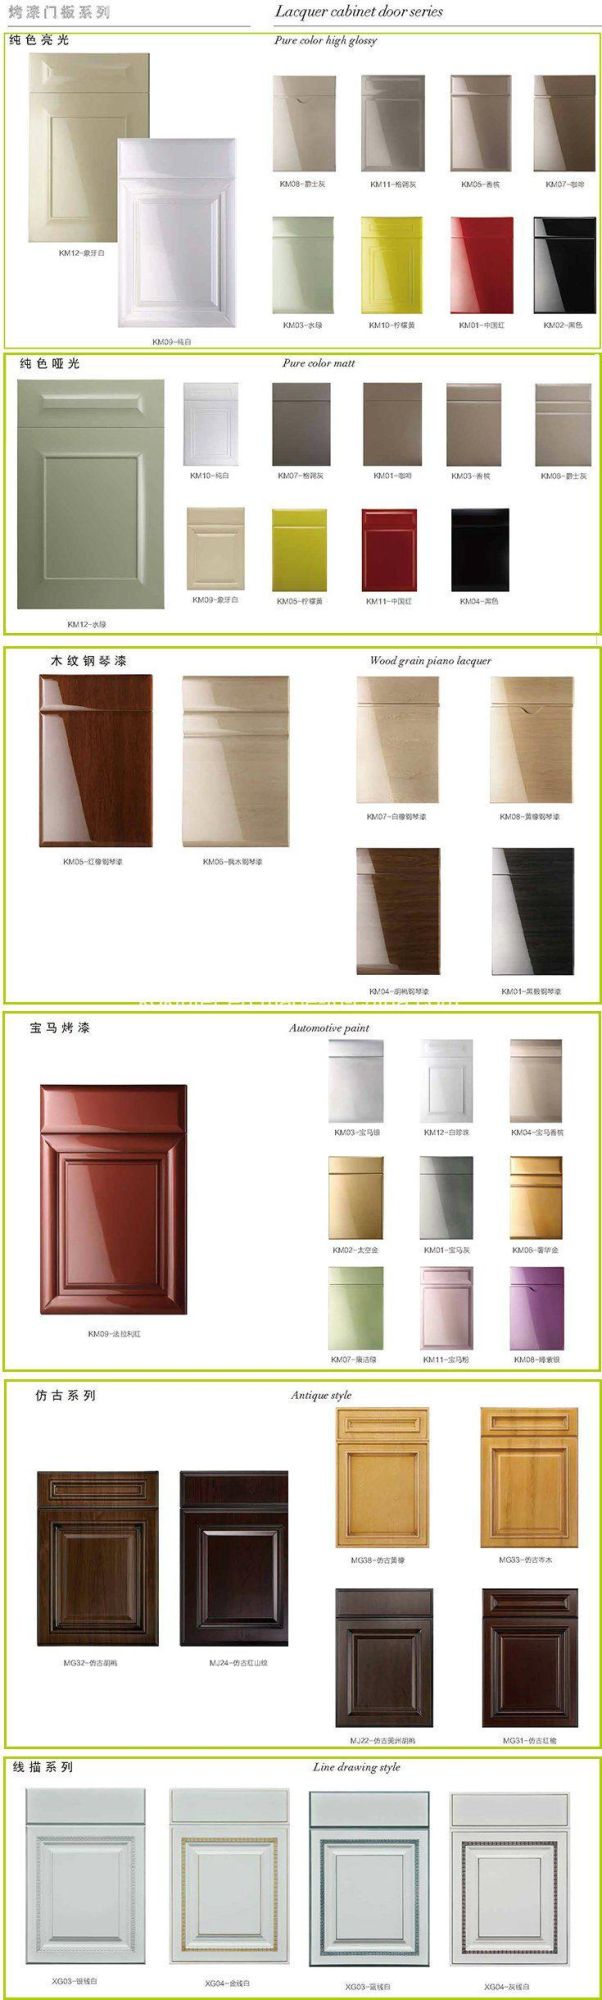 High Glossy White Kitchen Cabinet Modern Cabinet Modular Cabinet